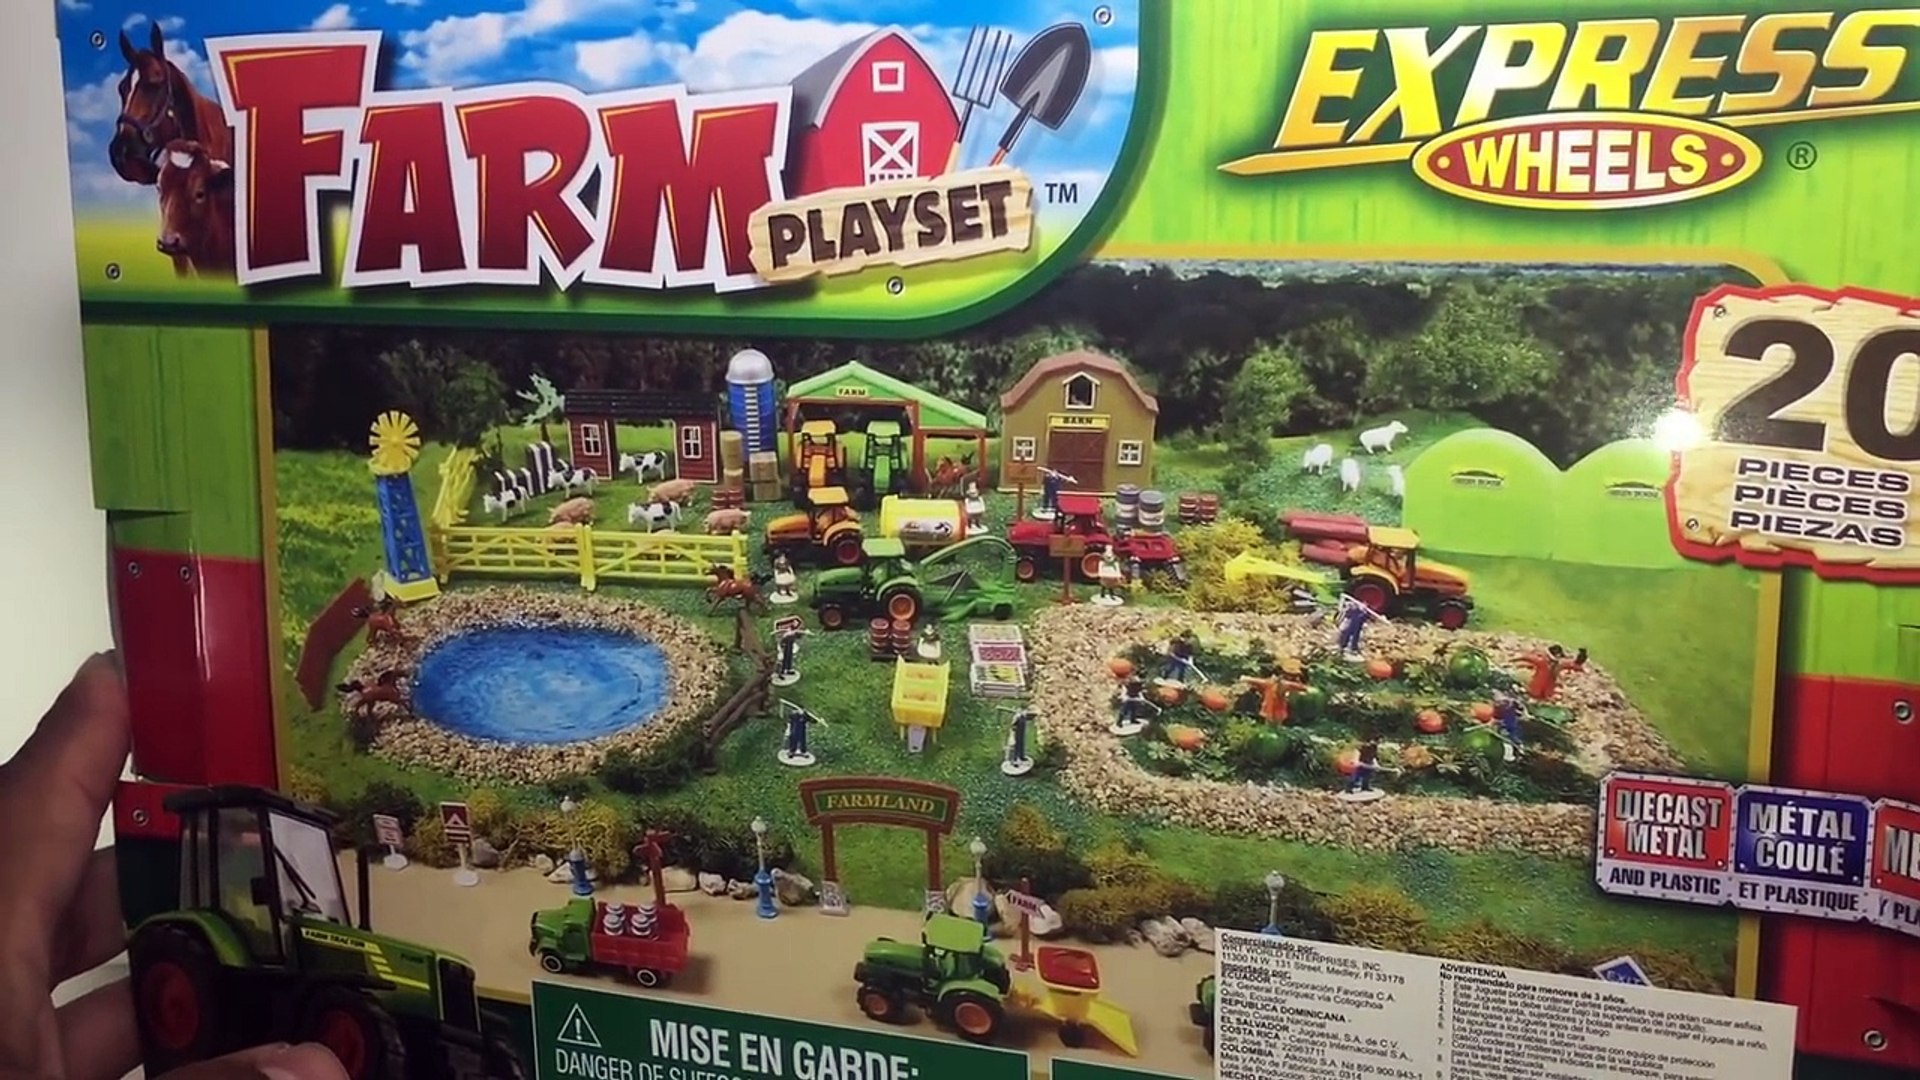 Videos de trores infantiles de juguete Farmland Farm de Express Wheels -  video Dailymotion